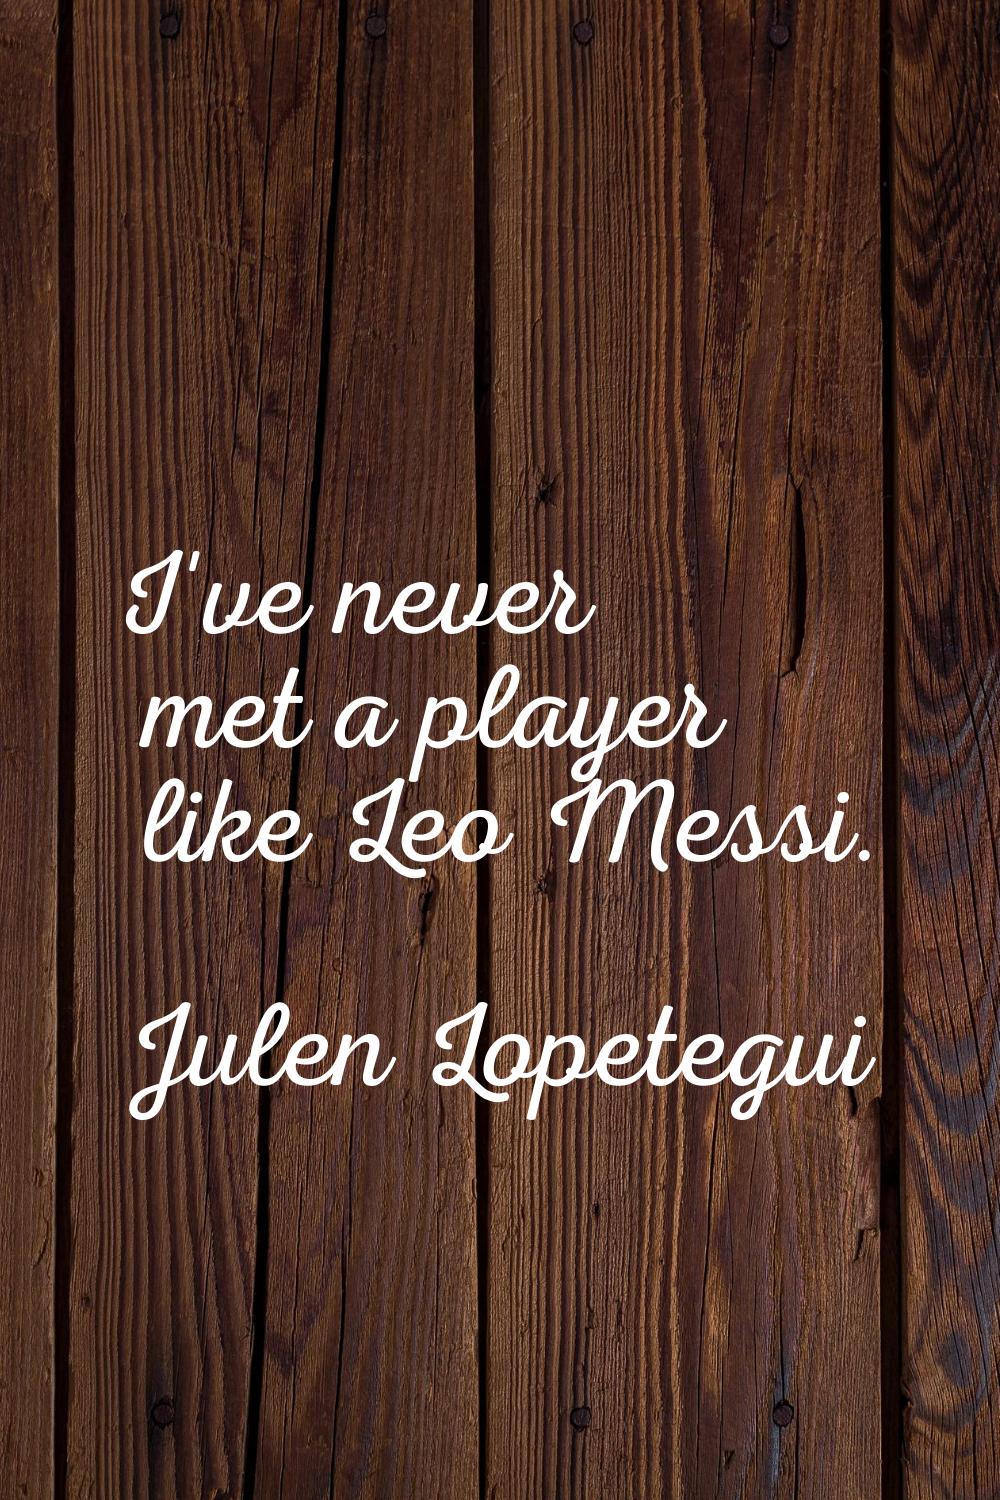 I've never met a player like Leo Messi.